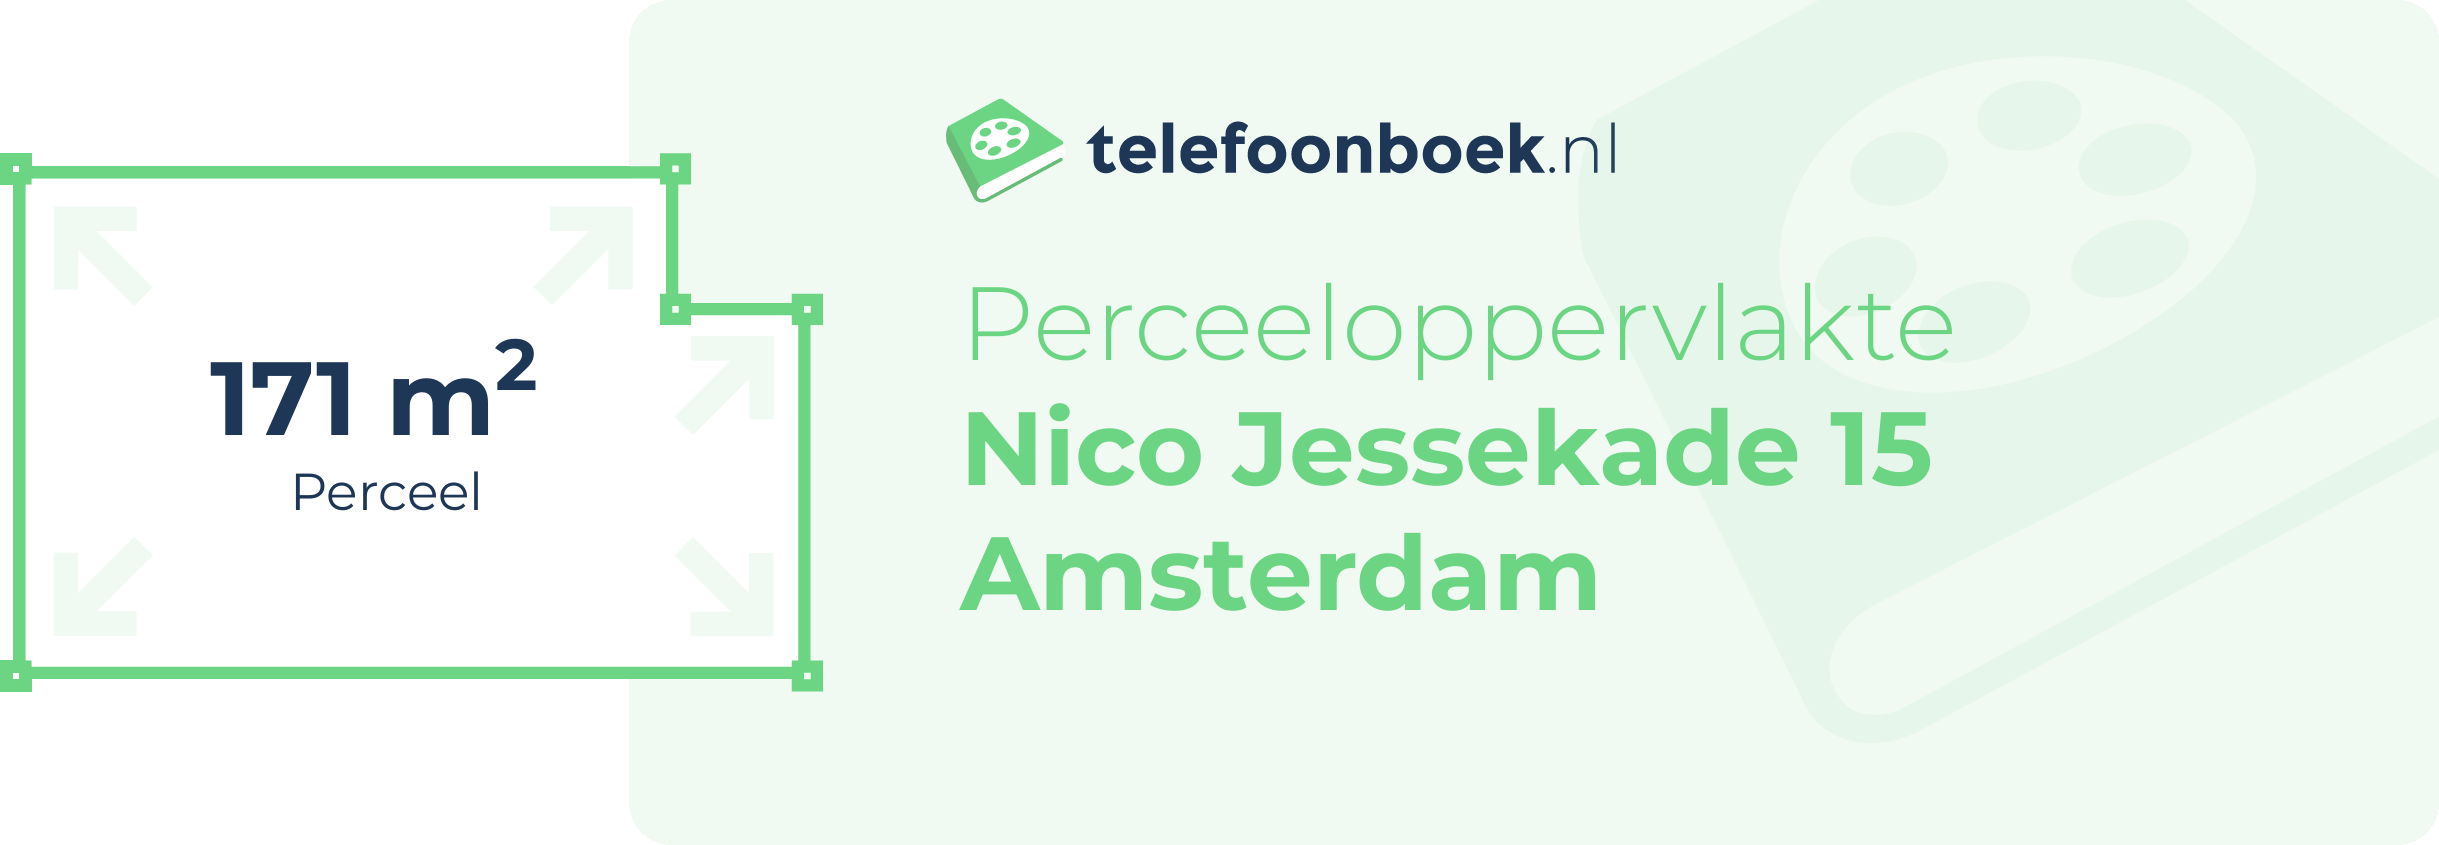 Perceeloppervlakte Nico Jessekade 15 Amsterdam